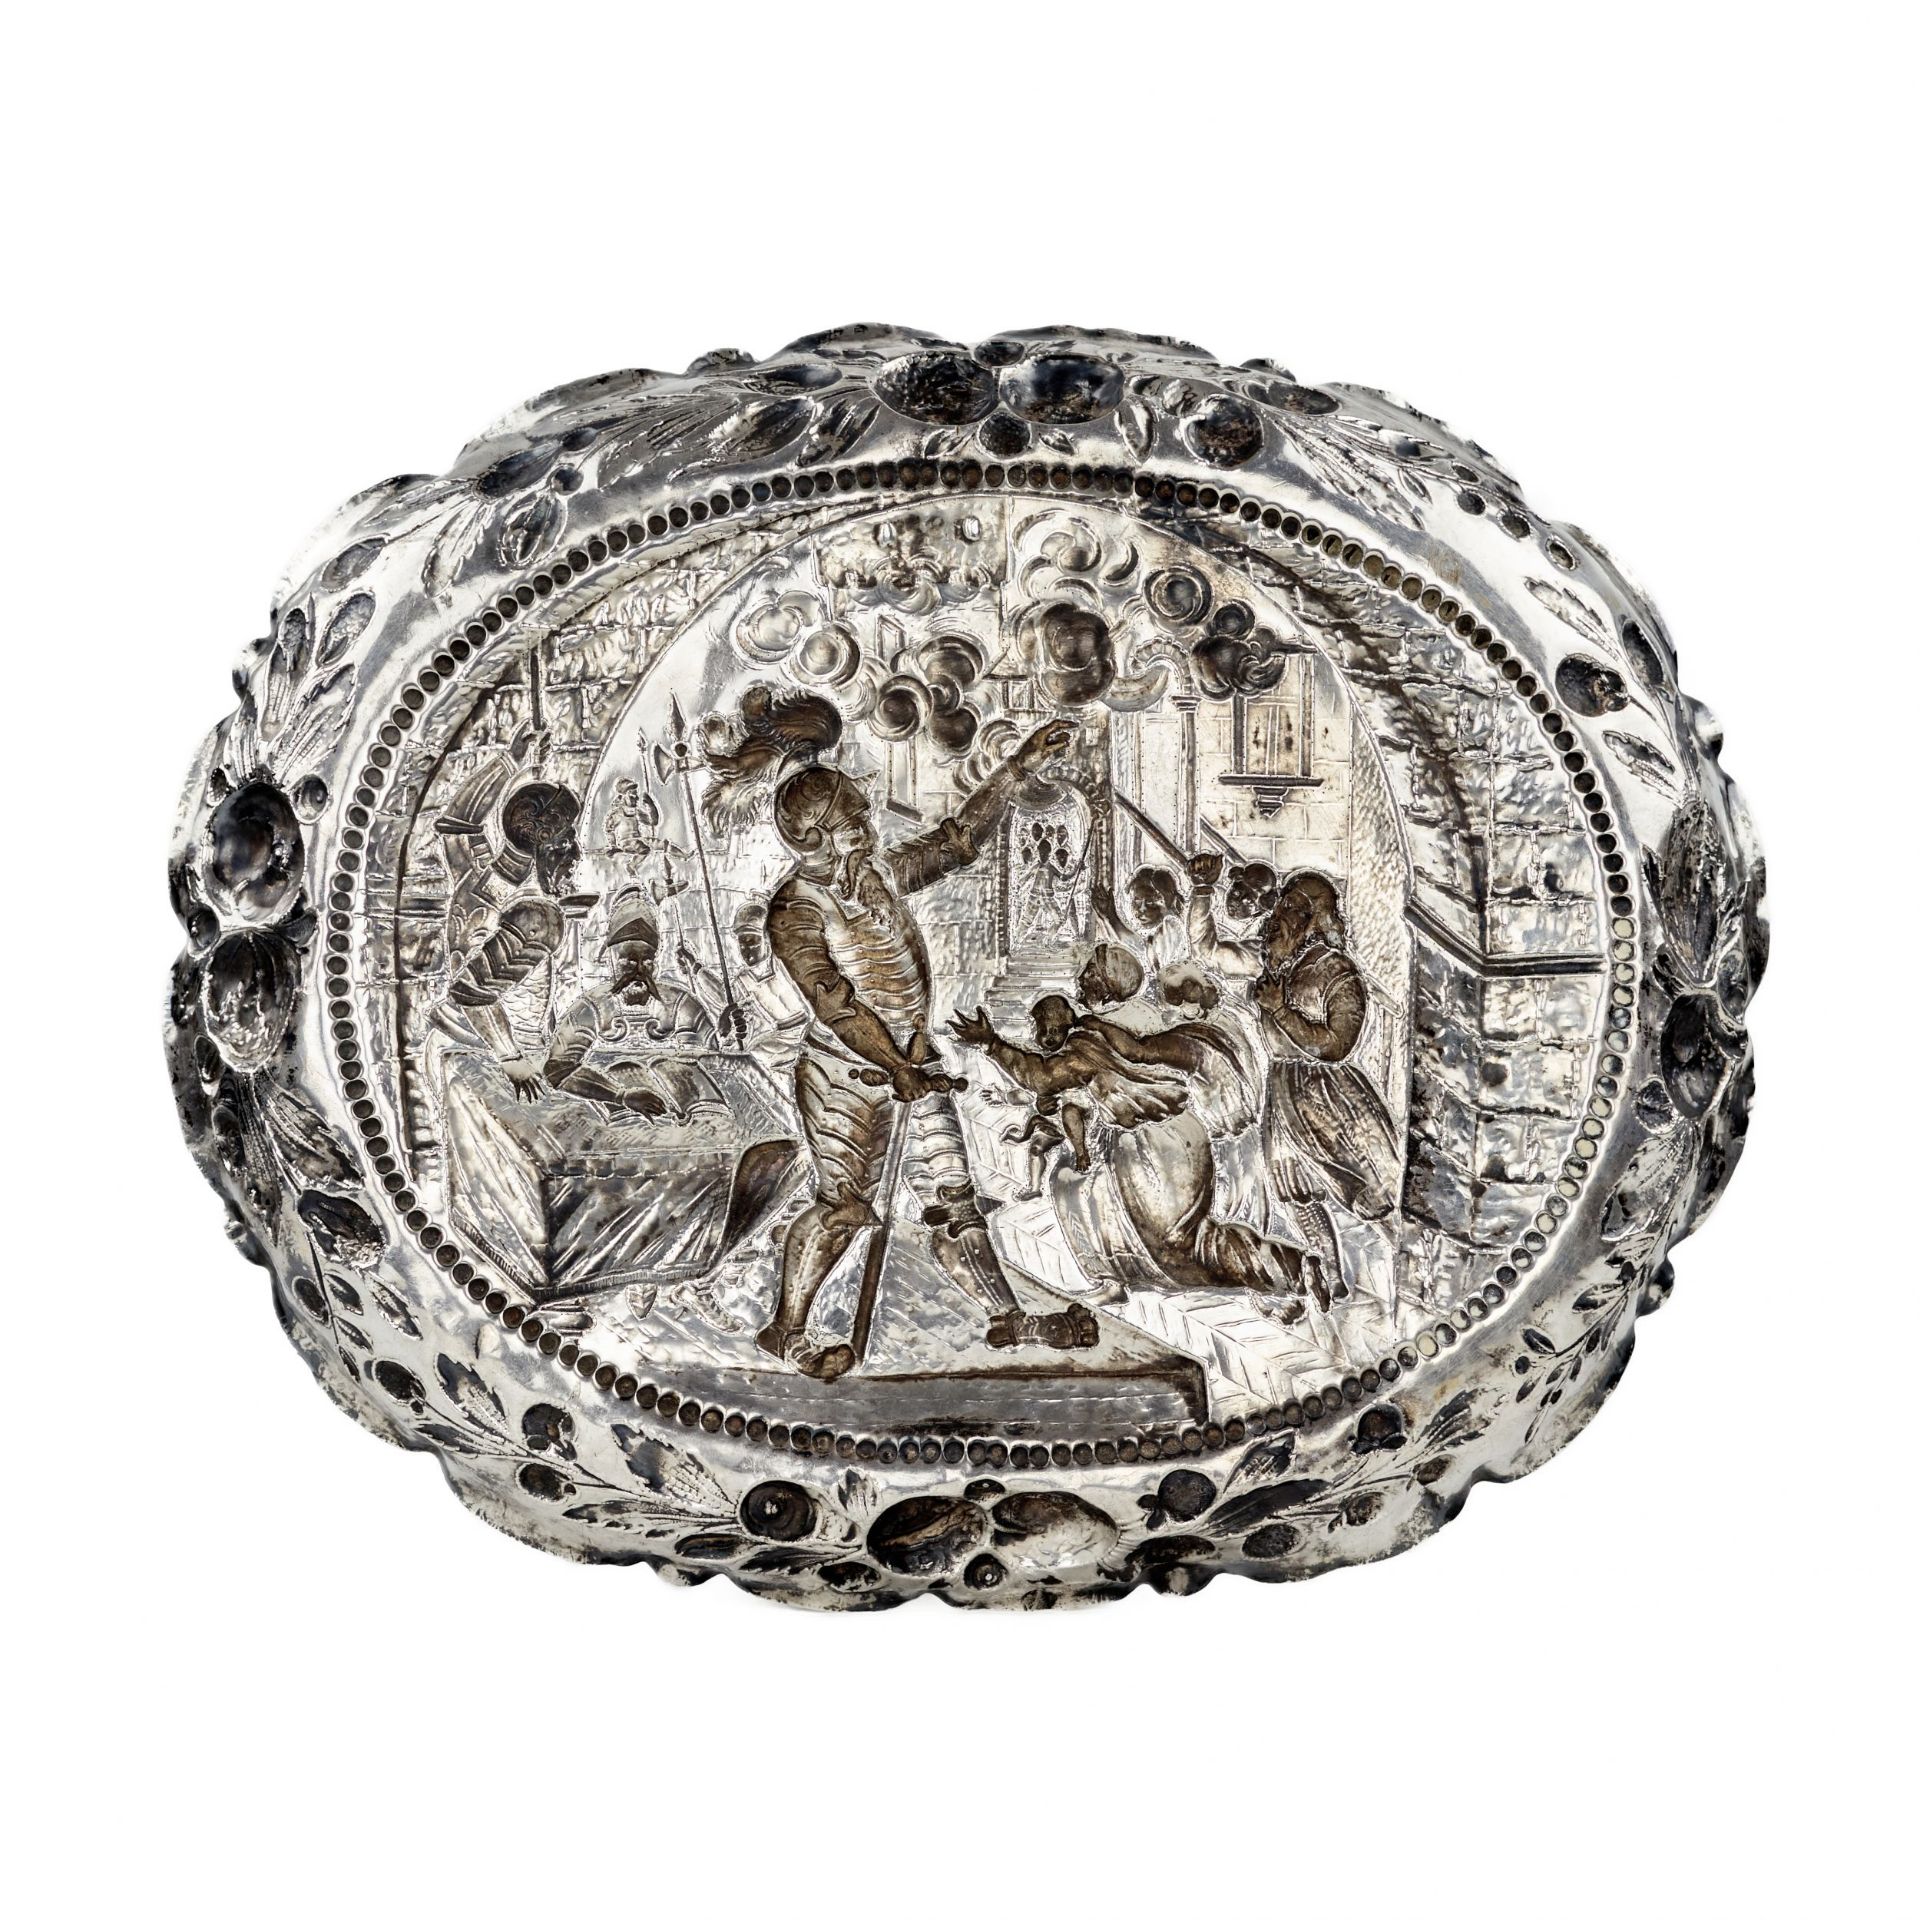 Silver, decorative dish with a scene of a knights court. 19th century. - Bild 3 aus 4